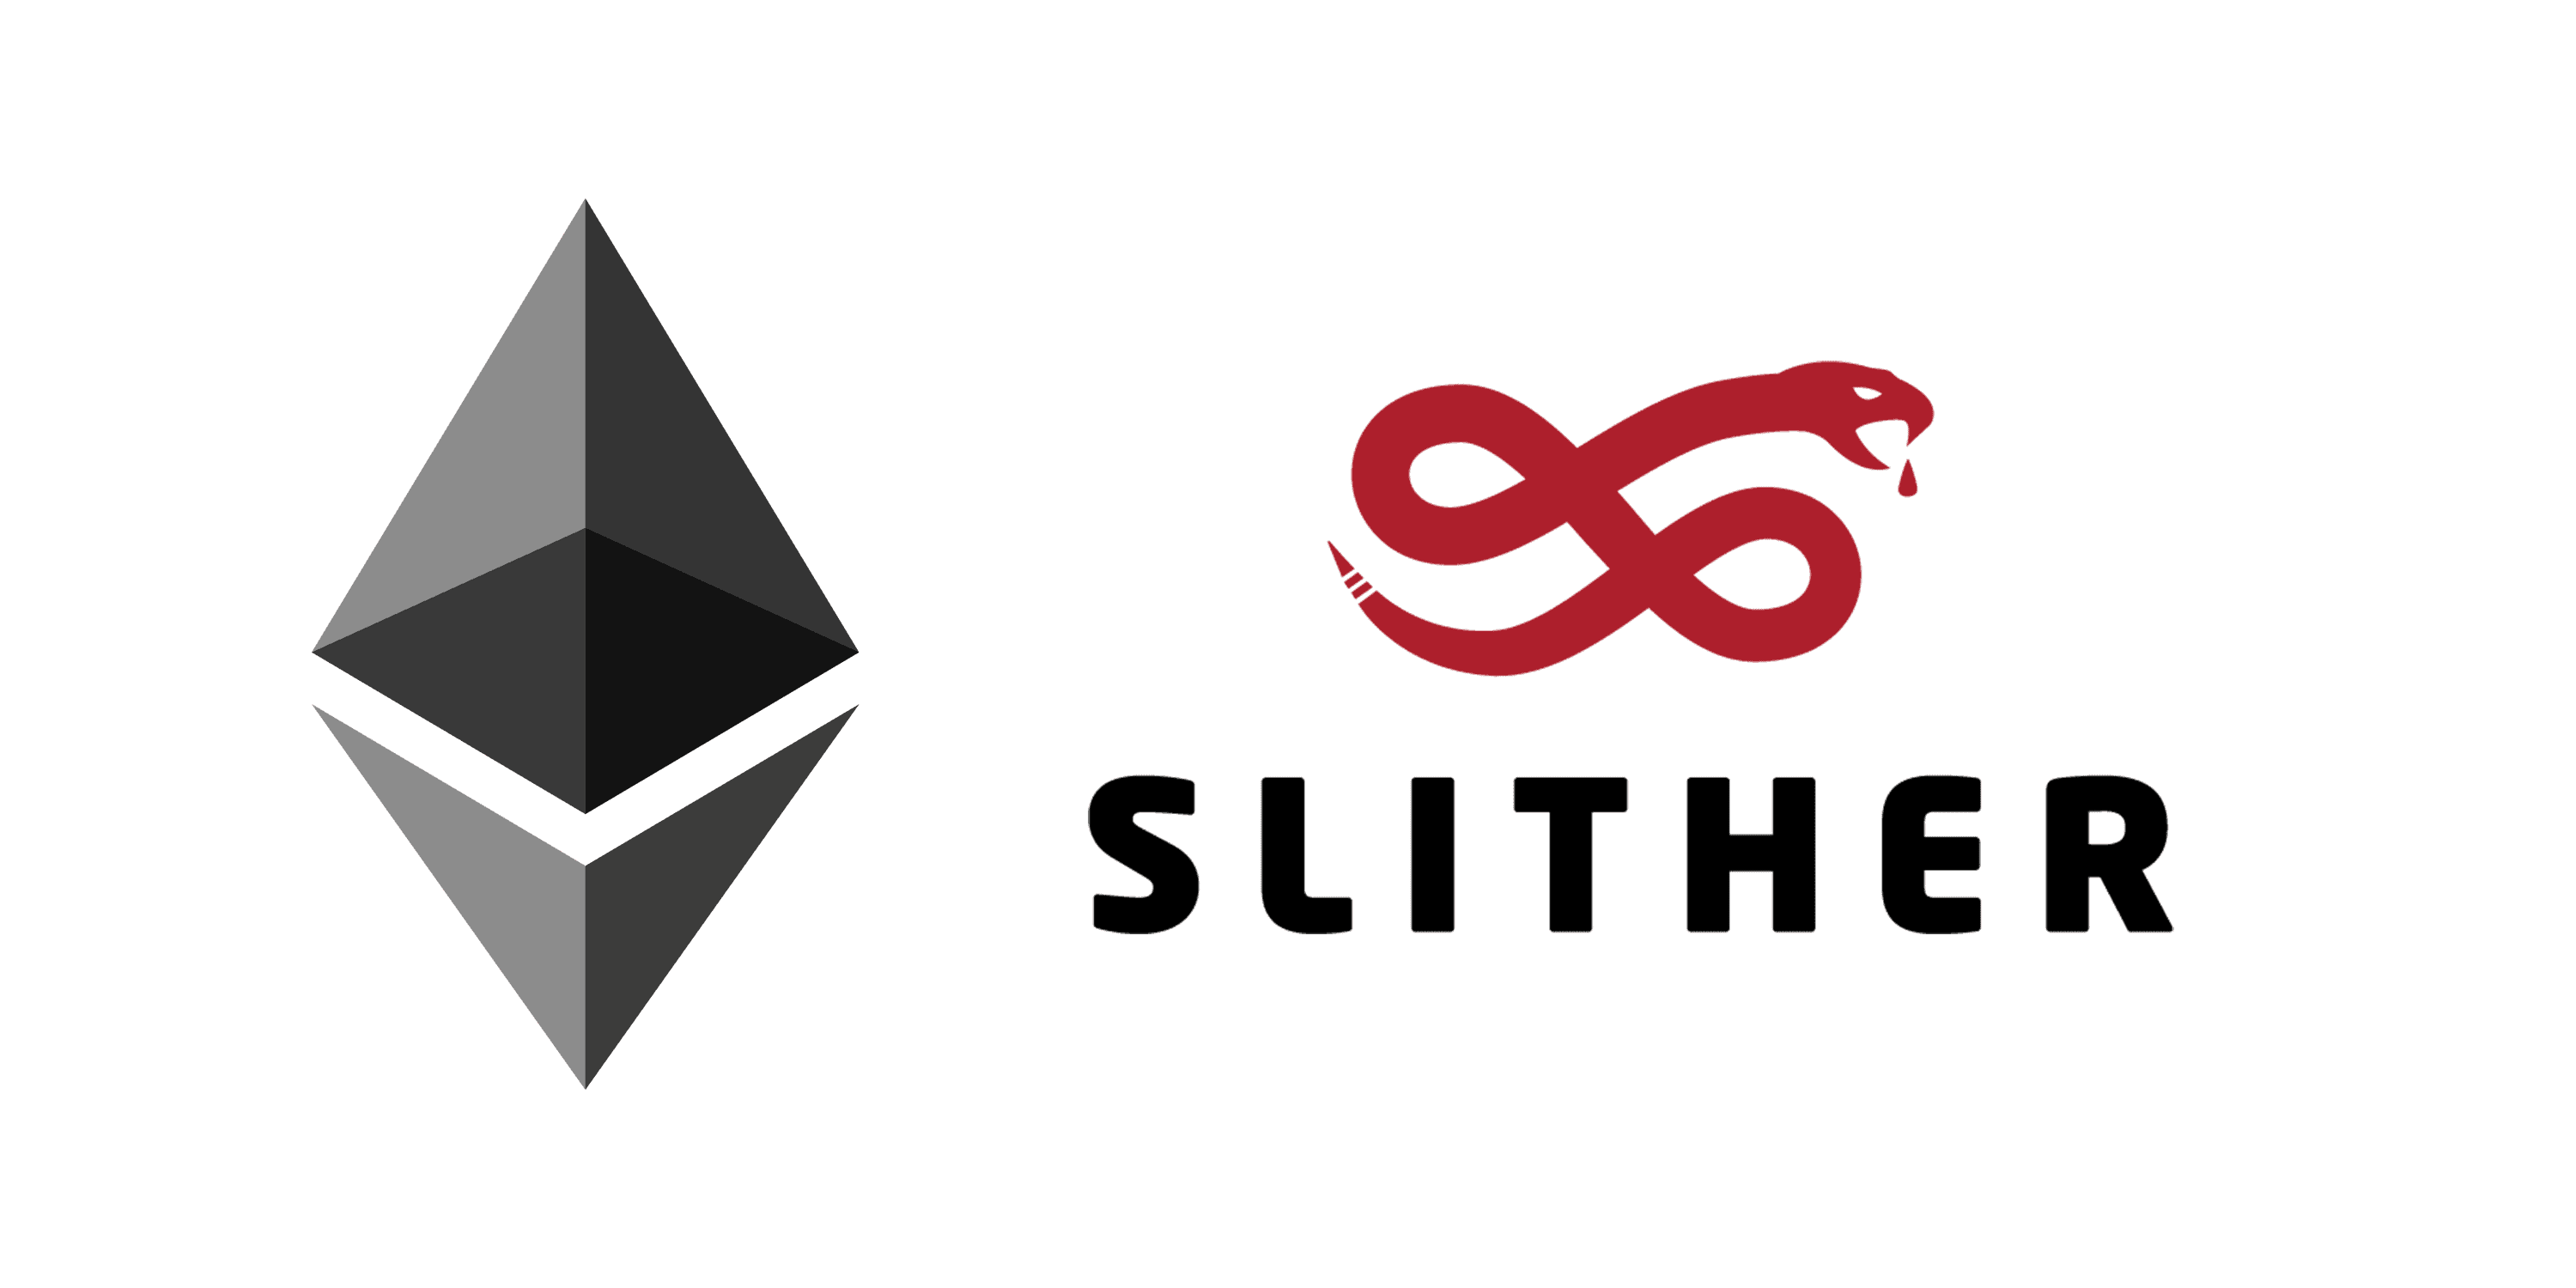 使用 Slither 來檢測你的 Solidity 智能合約程式碼